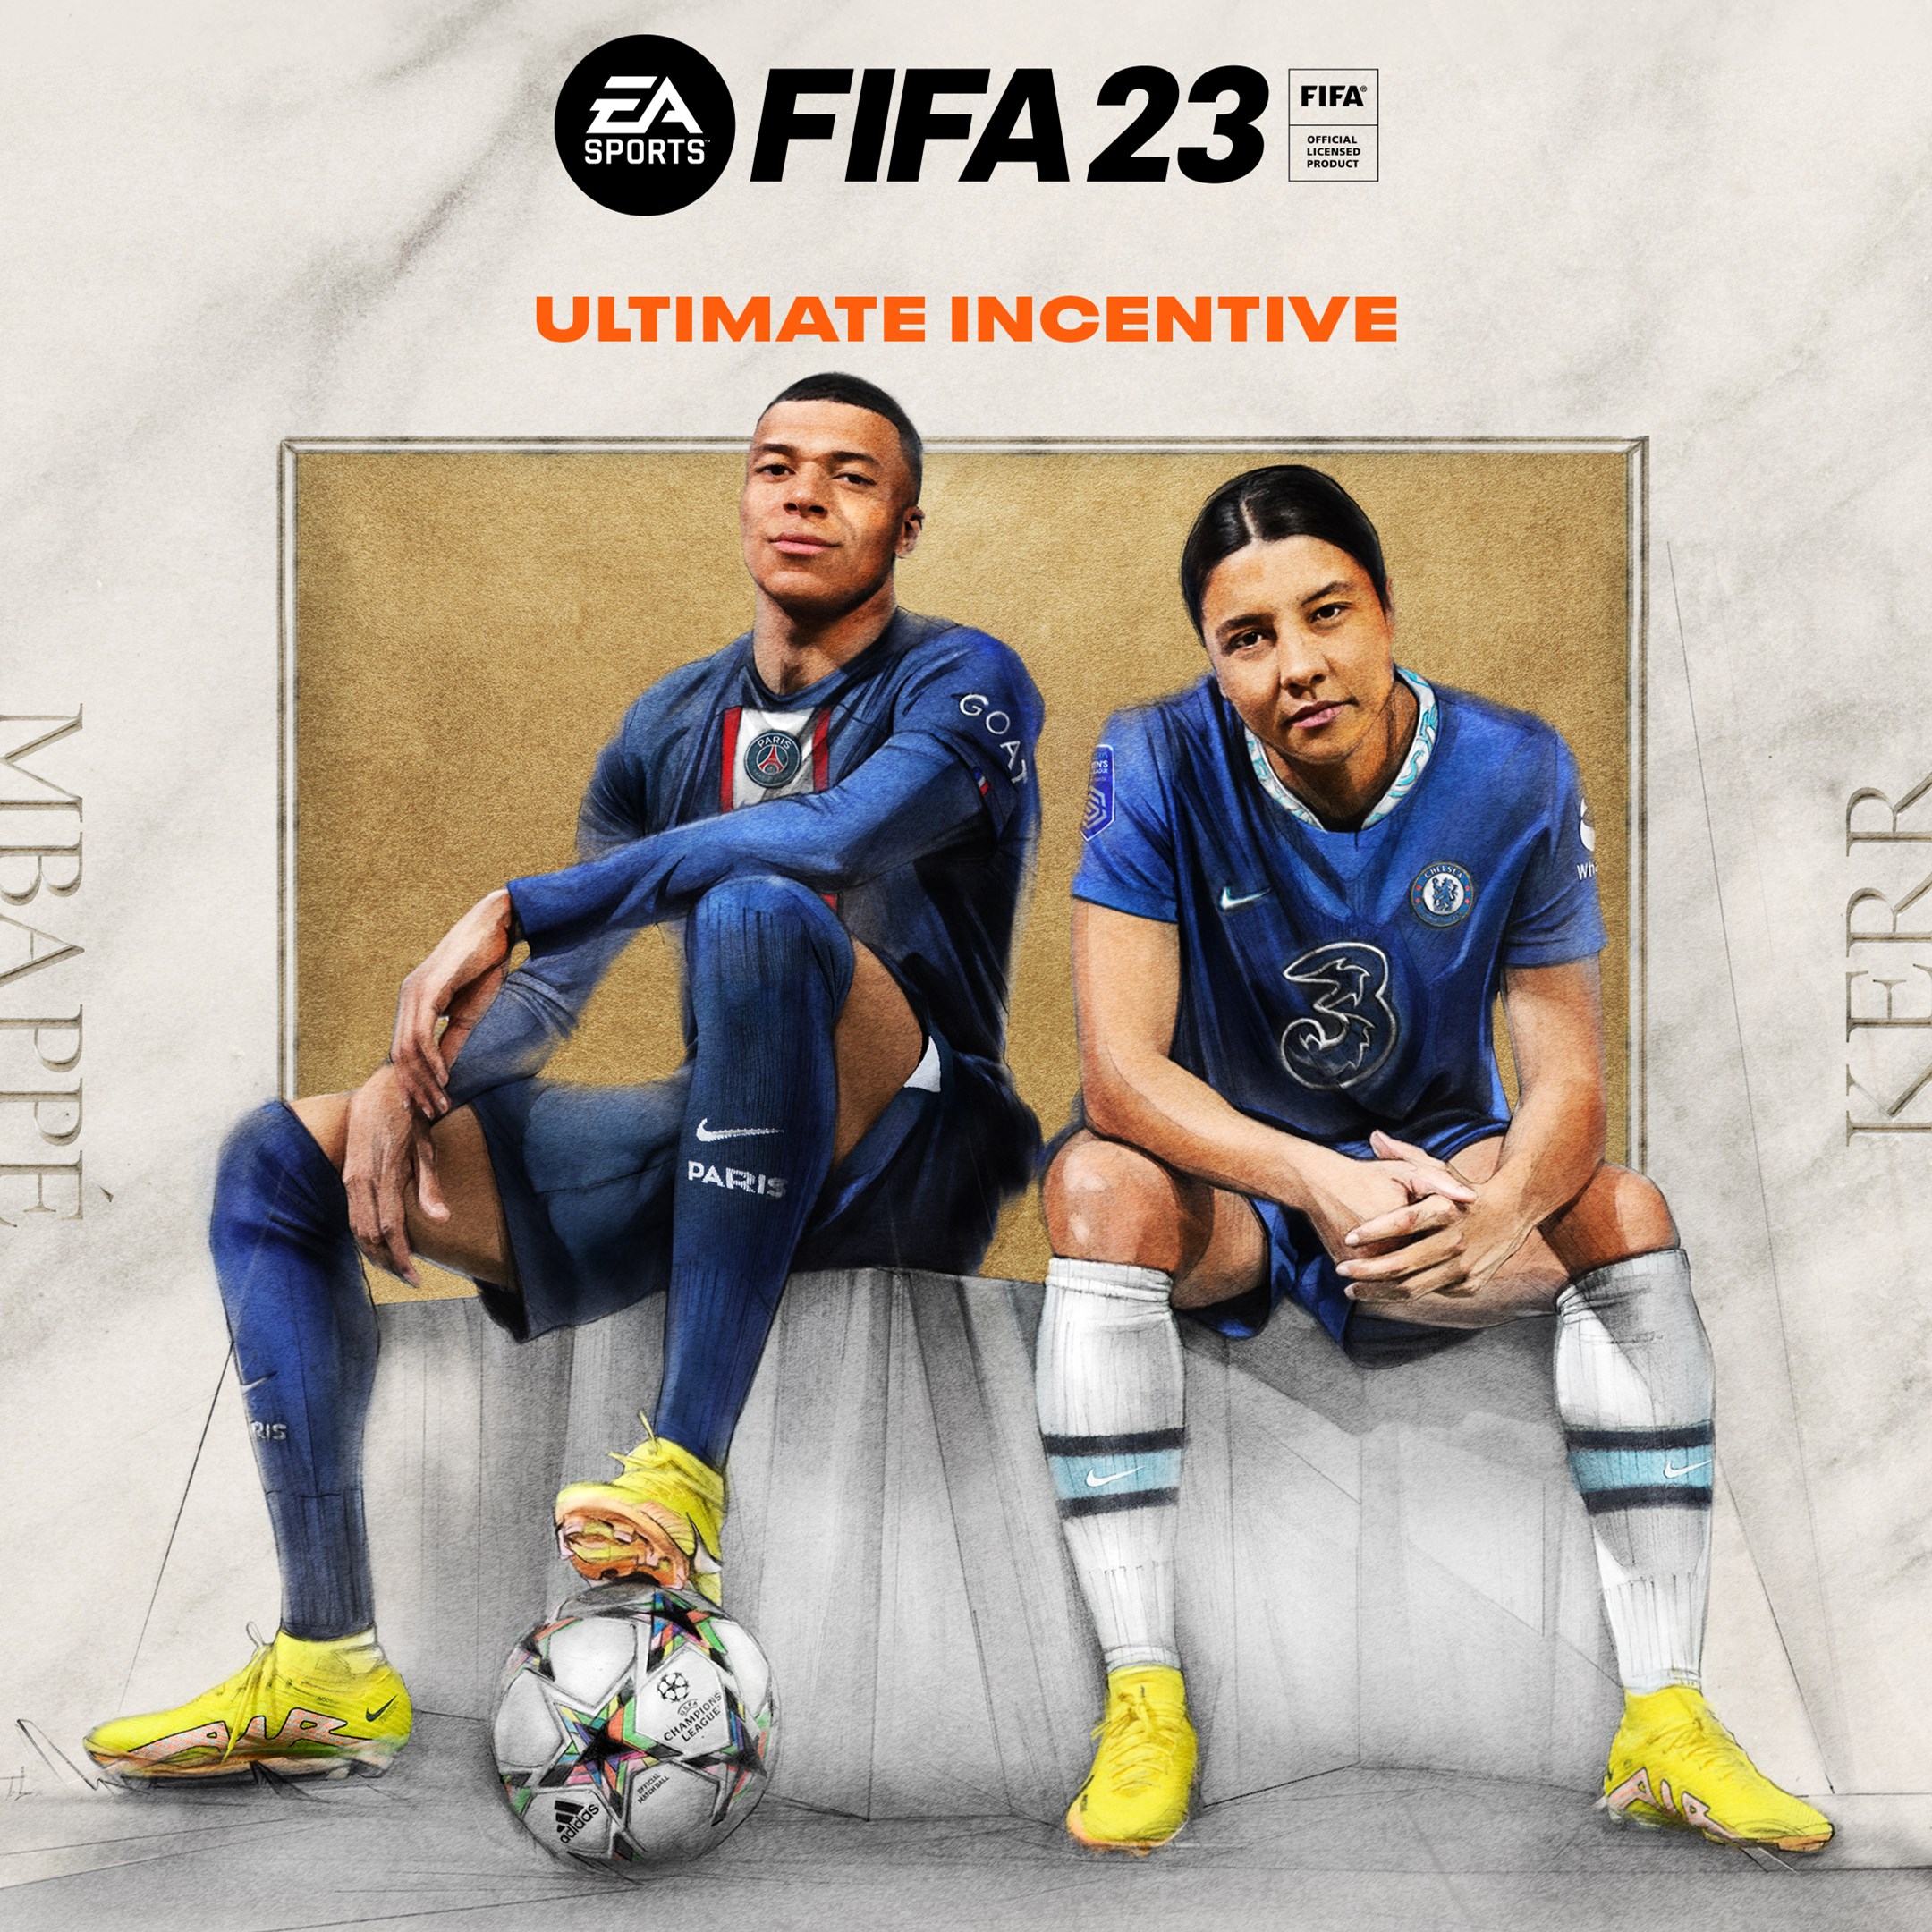 EA SPORTS™ FIFA 23 Ultimate Incentive